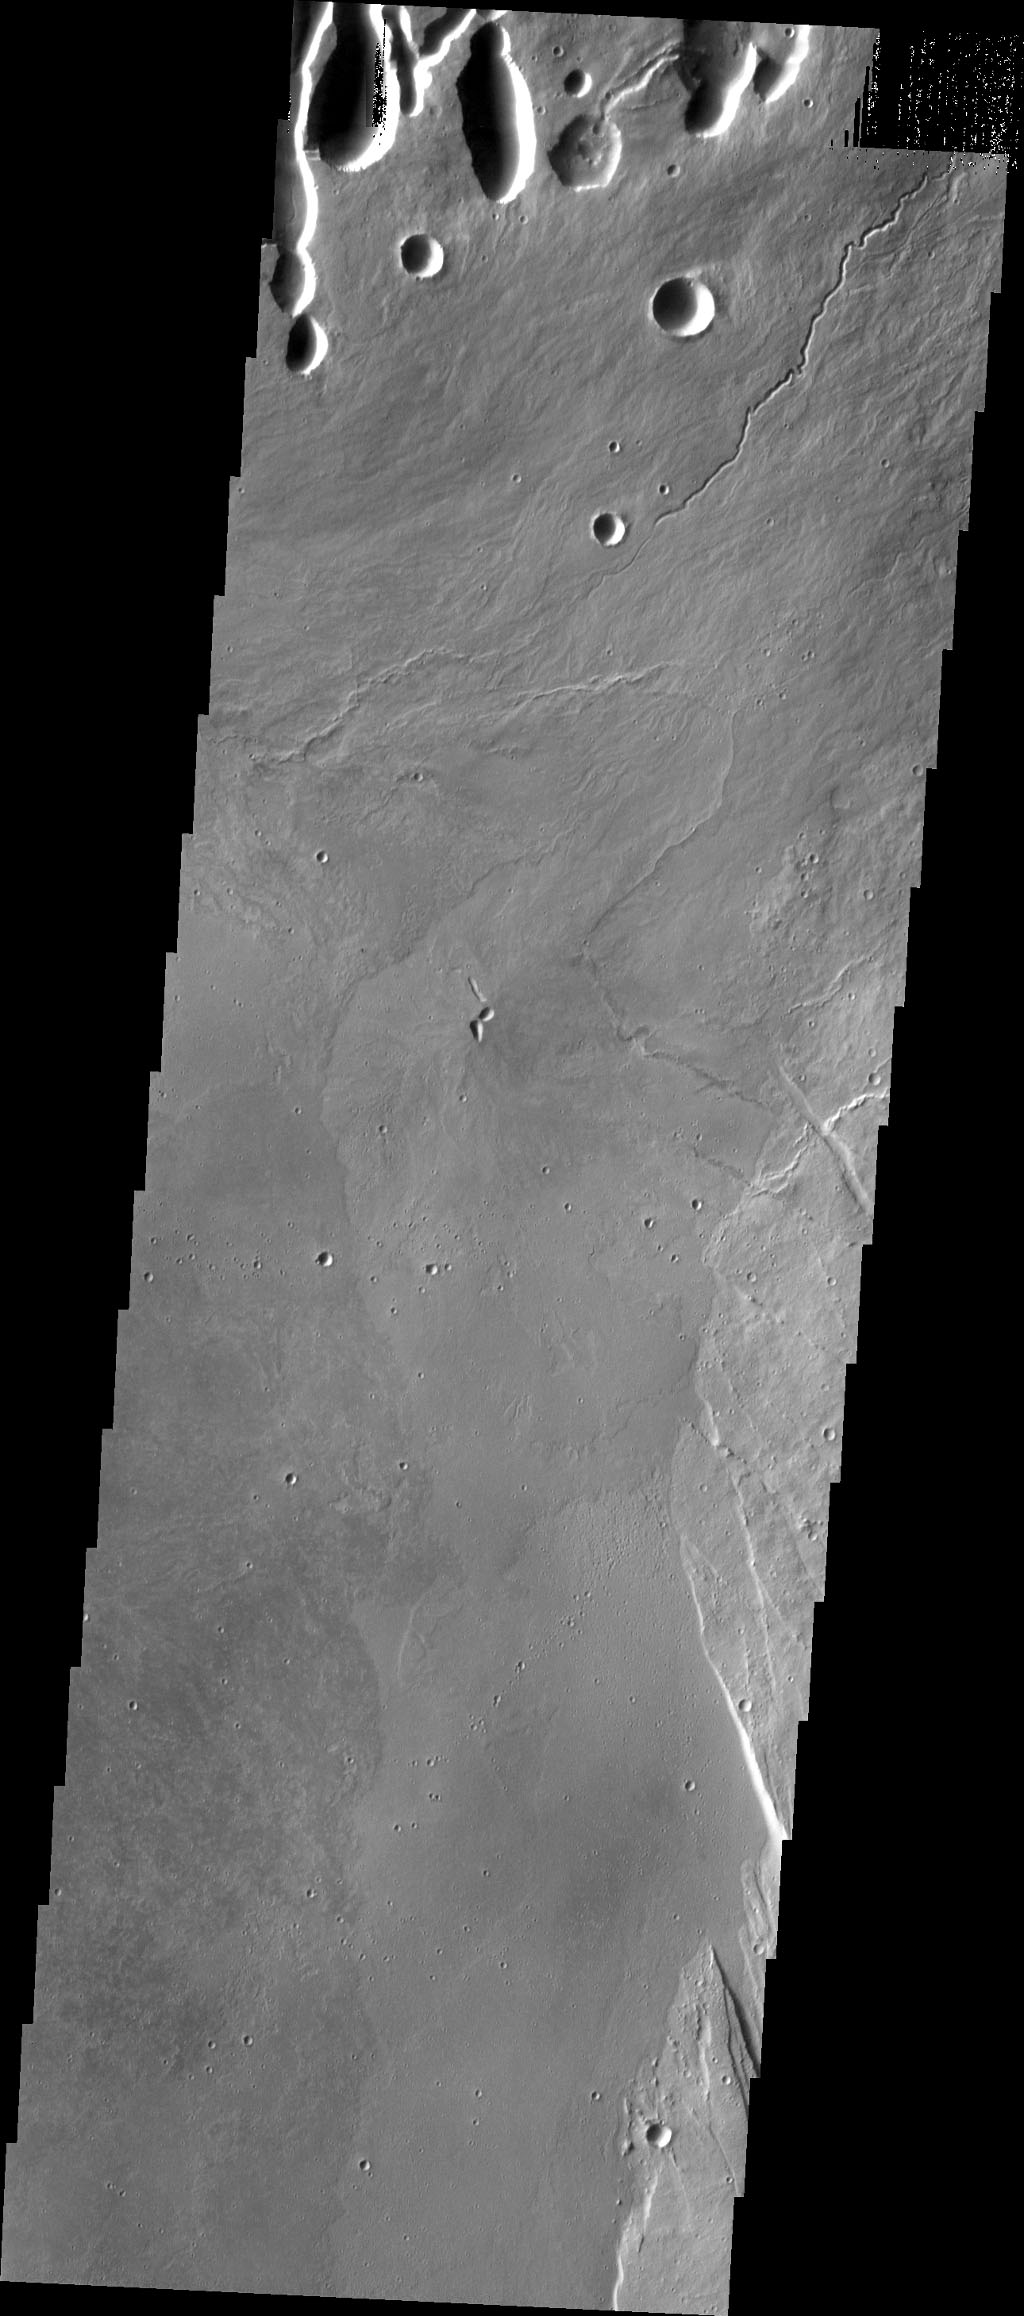 Investigating Mars: Arsia Mons